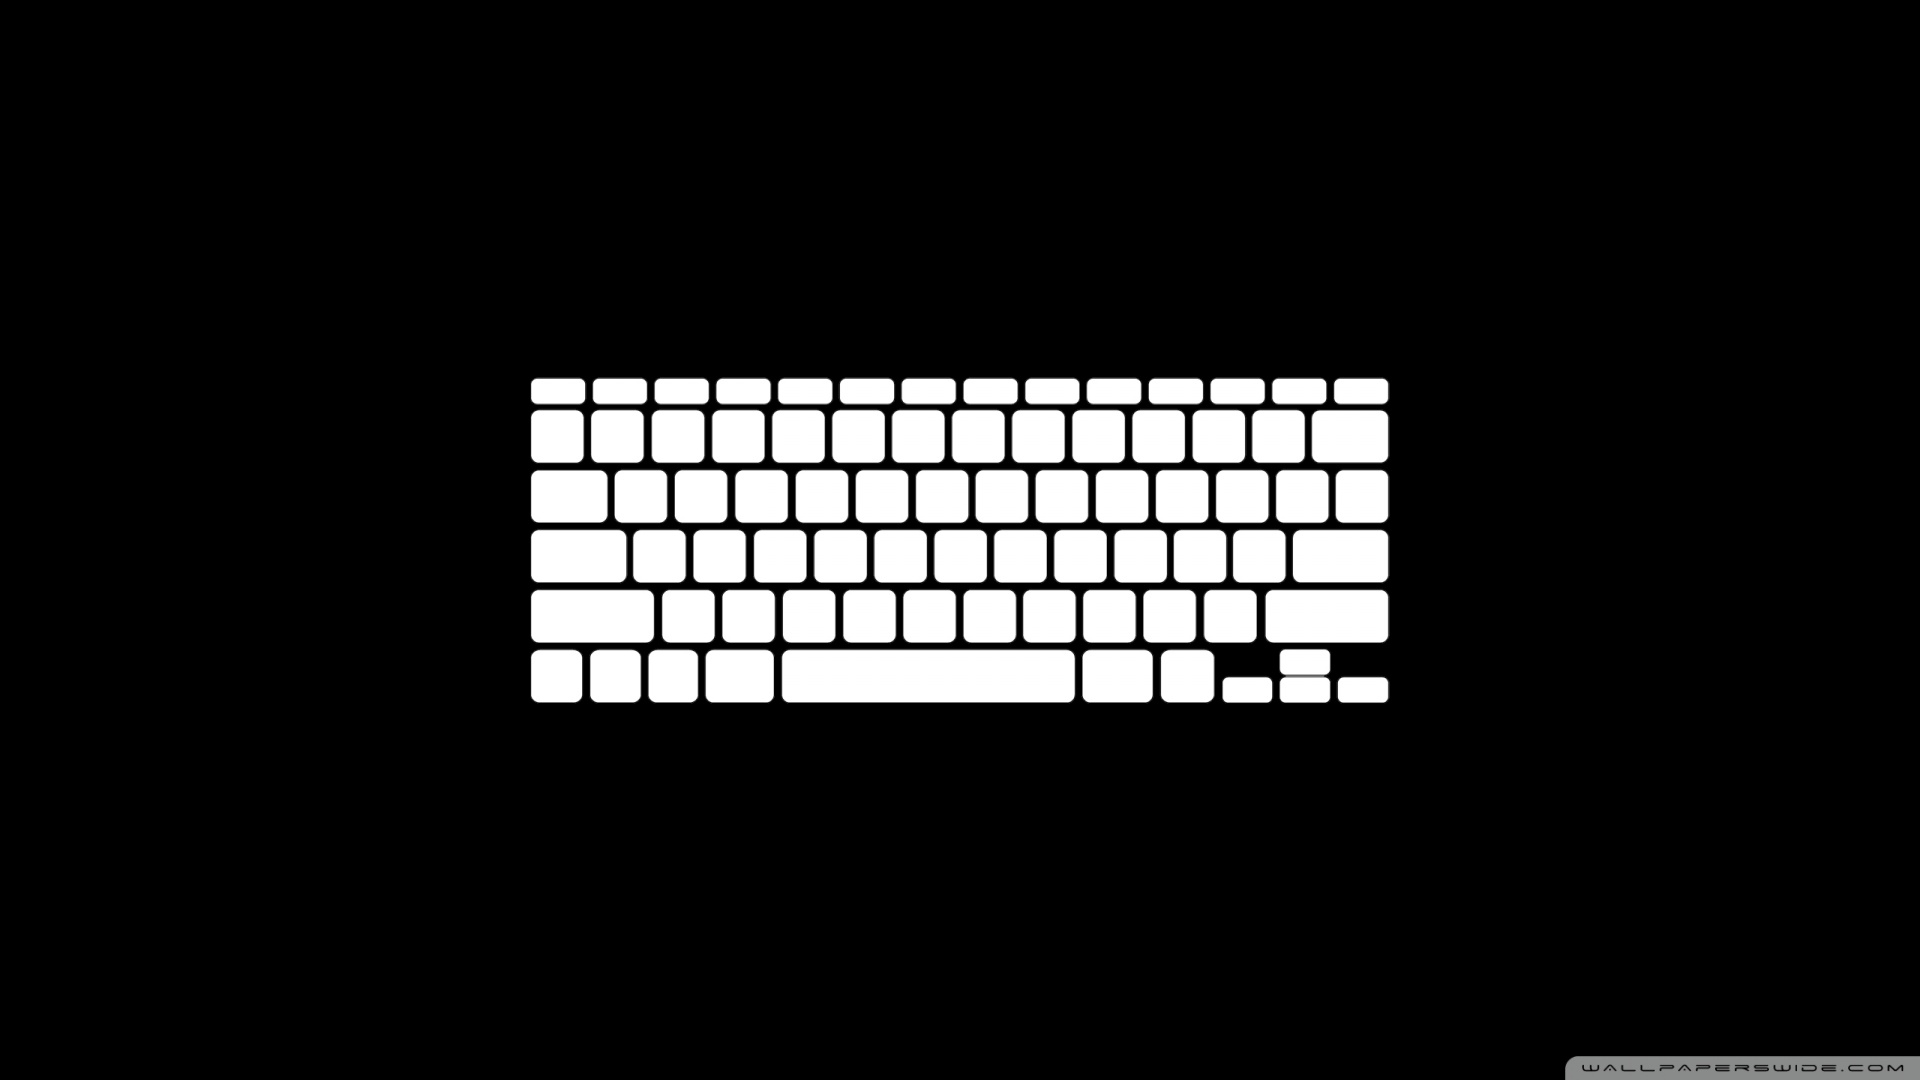 Puter Keyboard Wallpaper